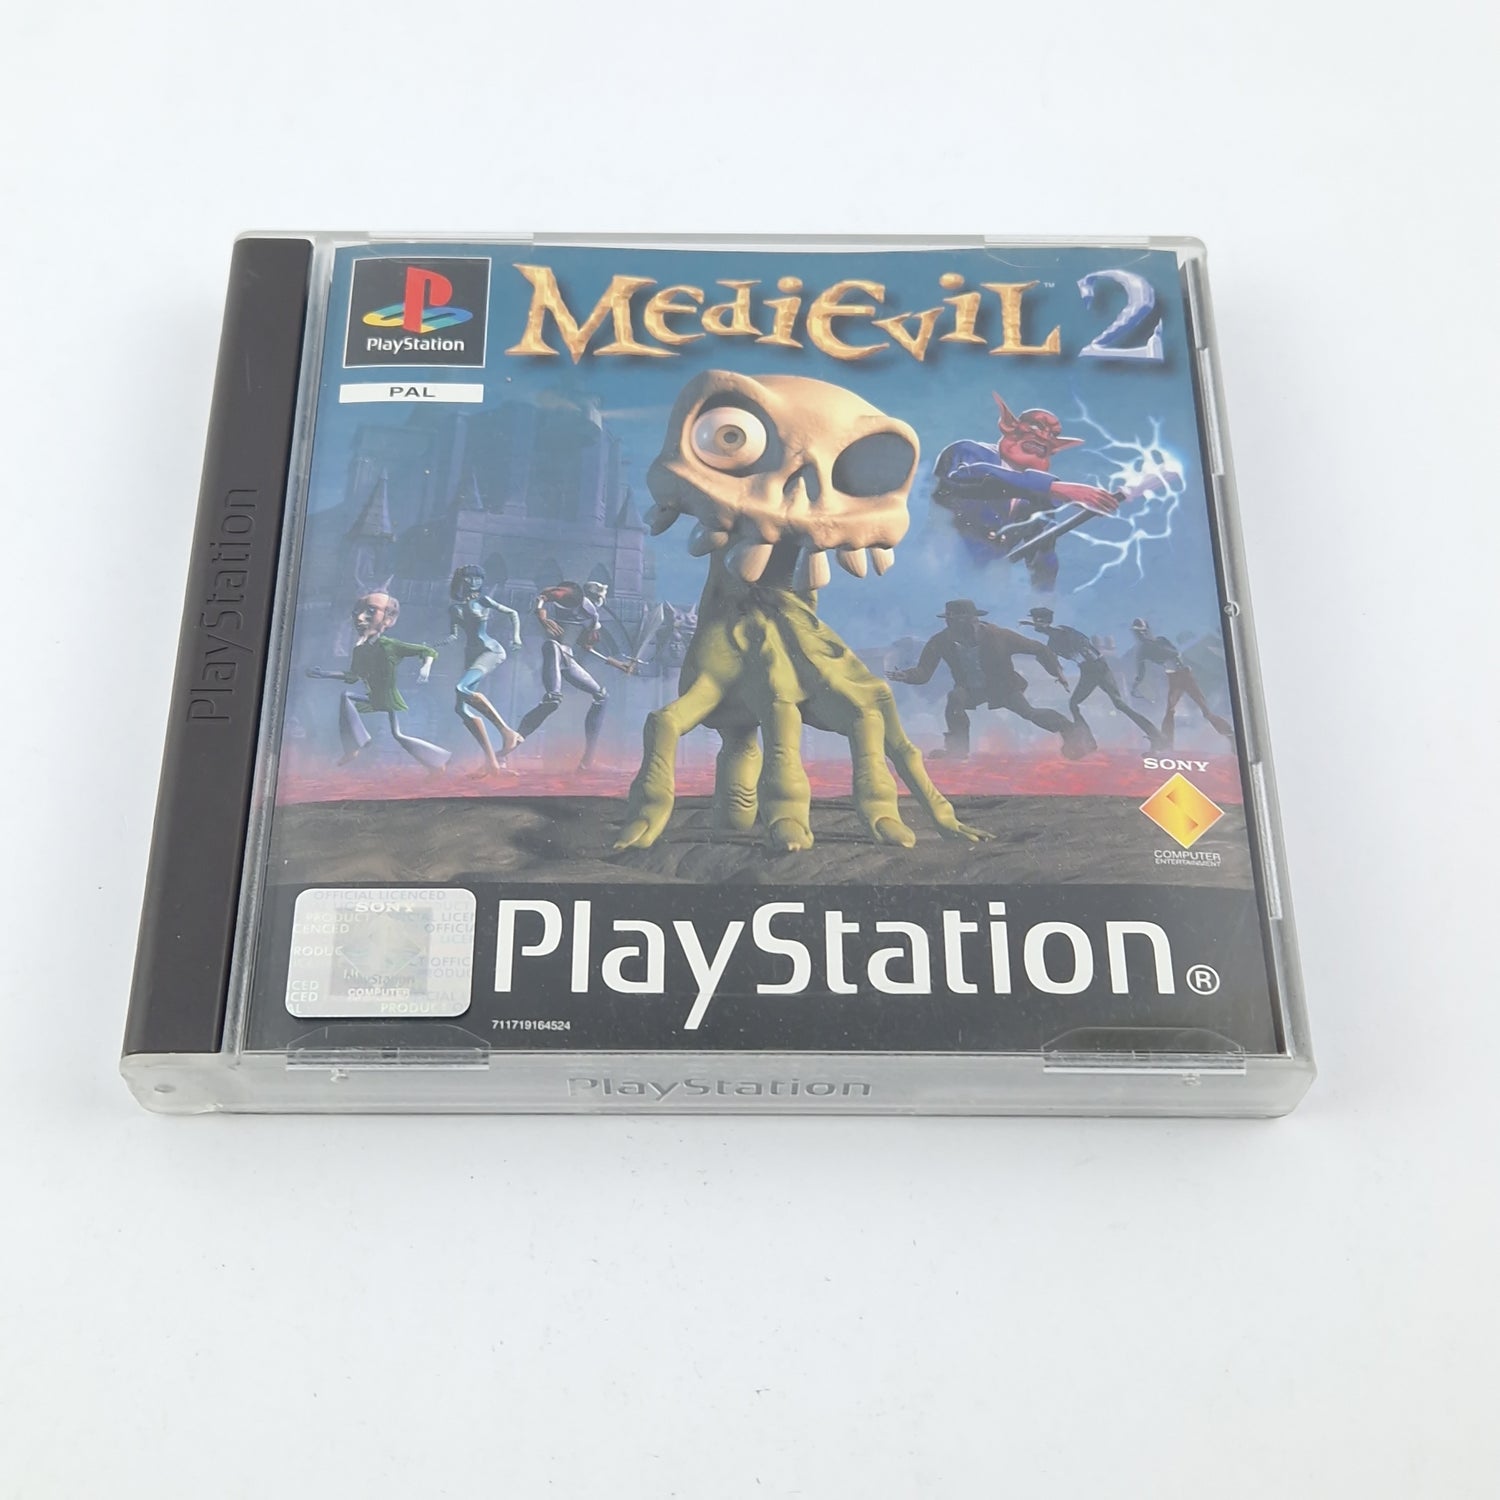 Playstation 1 Spiel : Medi Evil 2 - OVP Anleitung CD / SONY PS1 PSX PAL